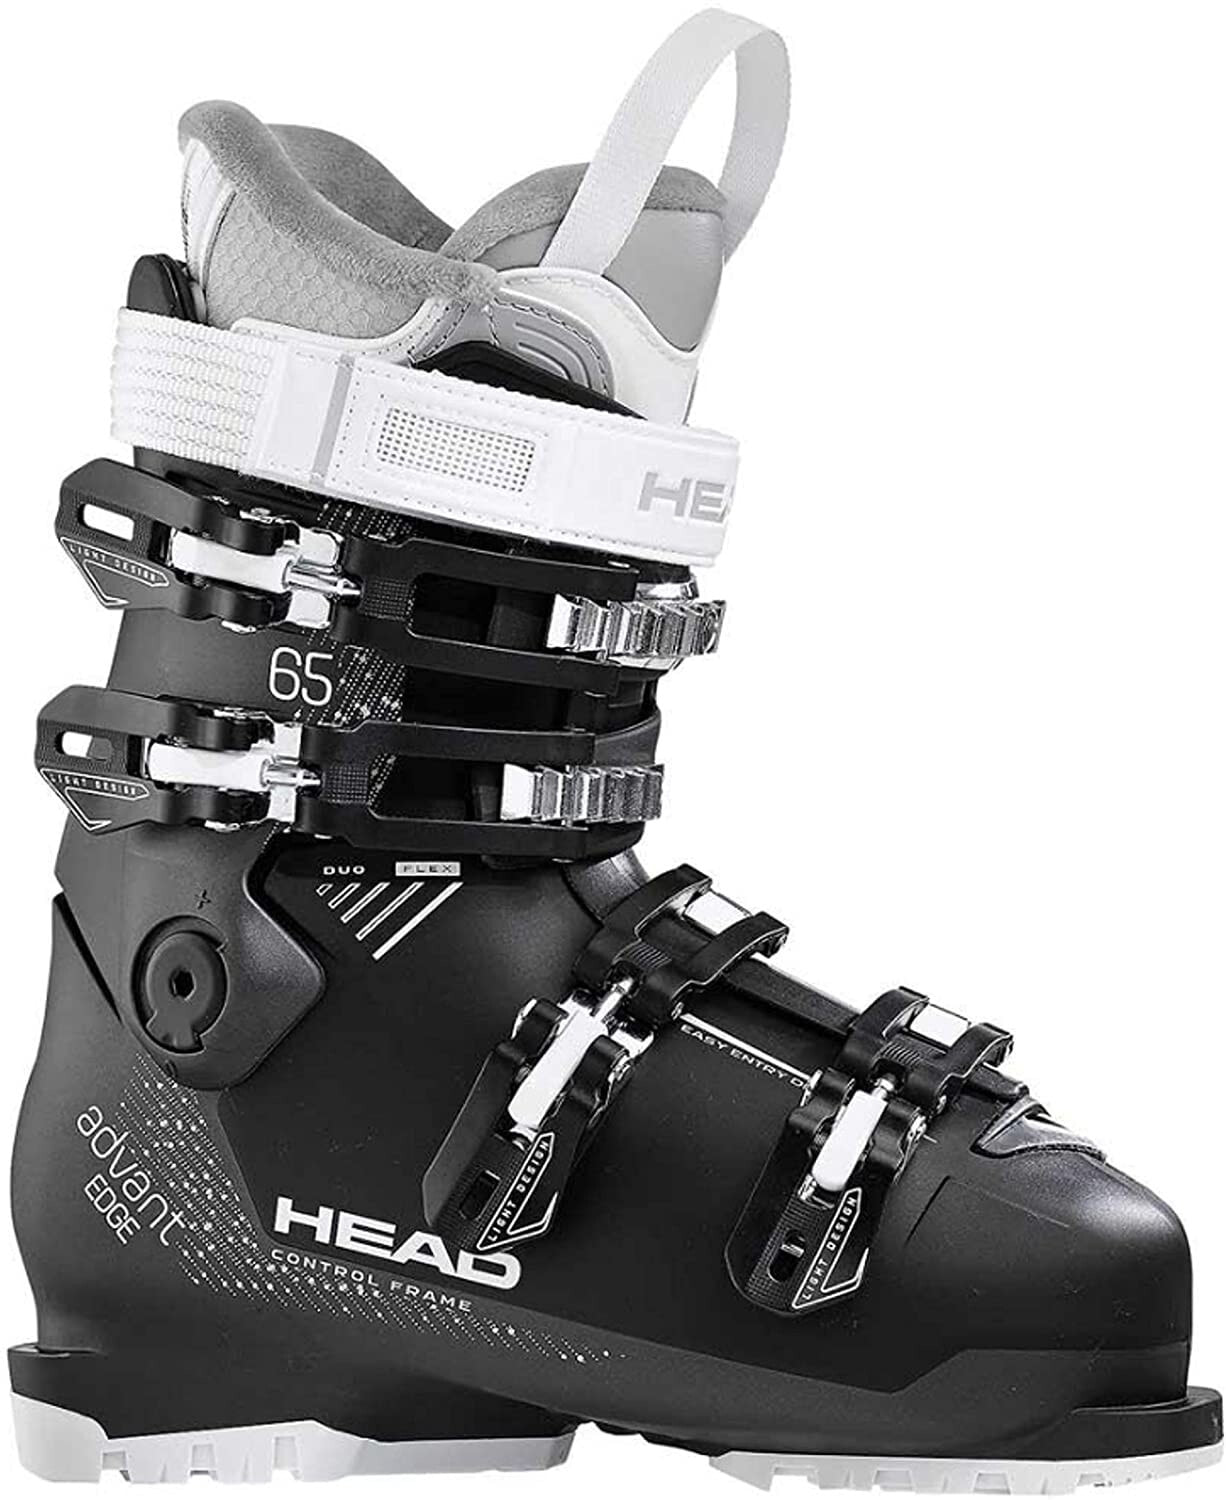 Лыжные ботинки HEAD Advant Edge 65